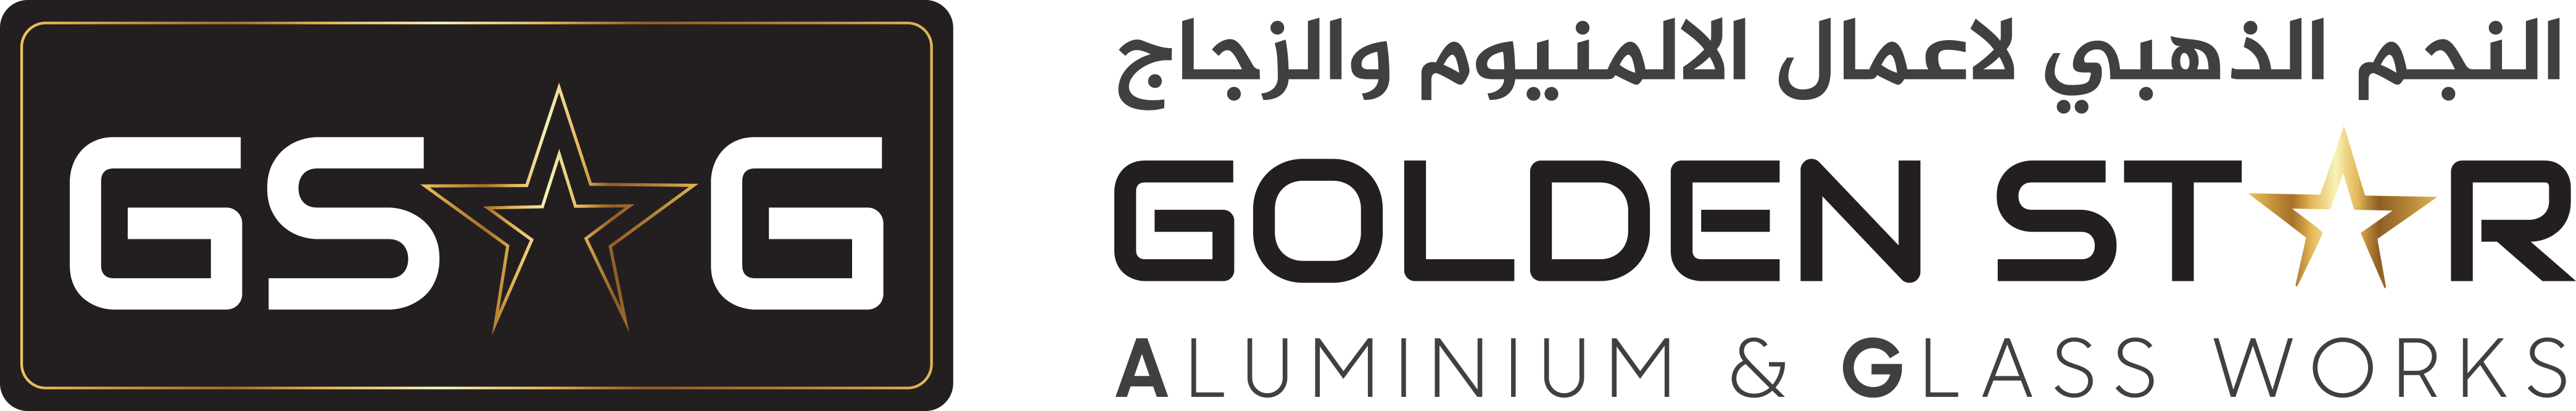 Golden Star Aluminum and Glass Works | Abu Dhabi | United Arab Emirates